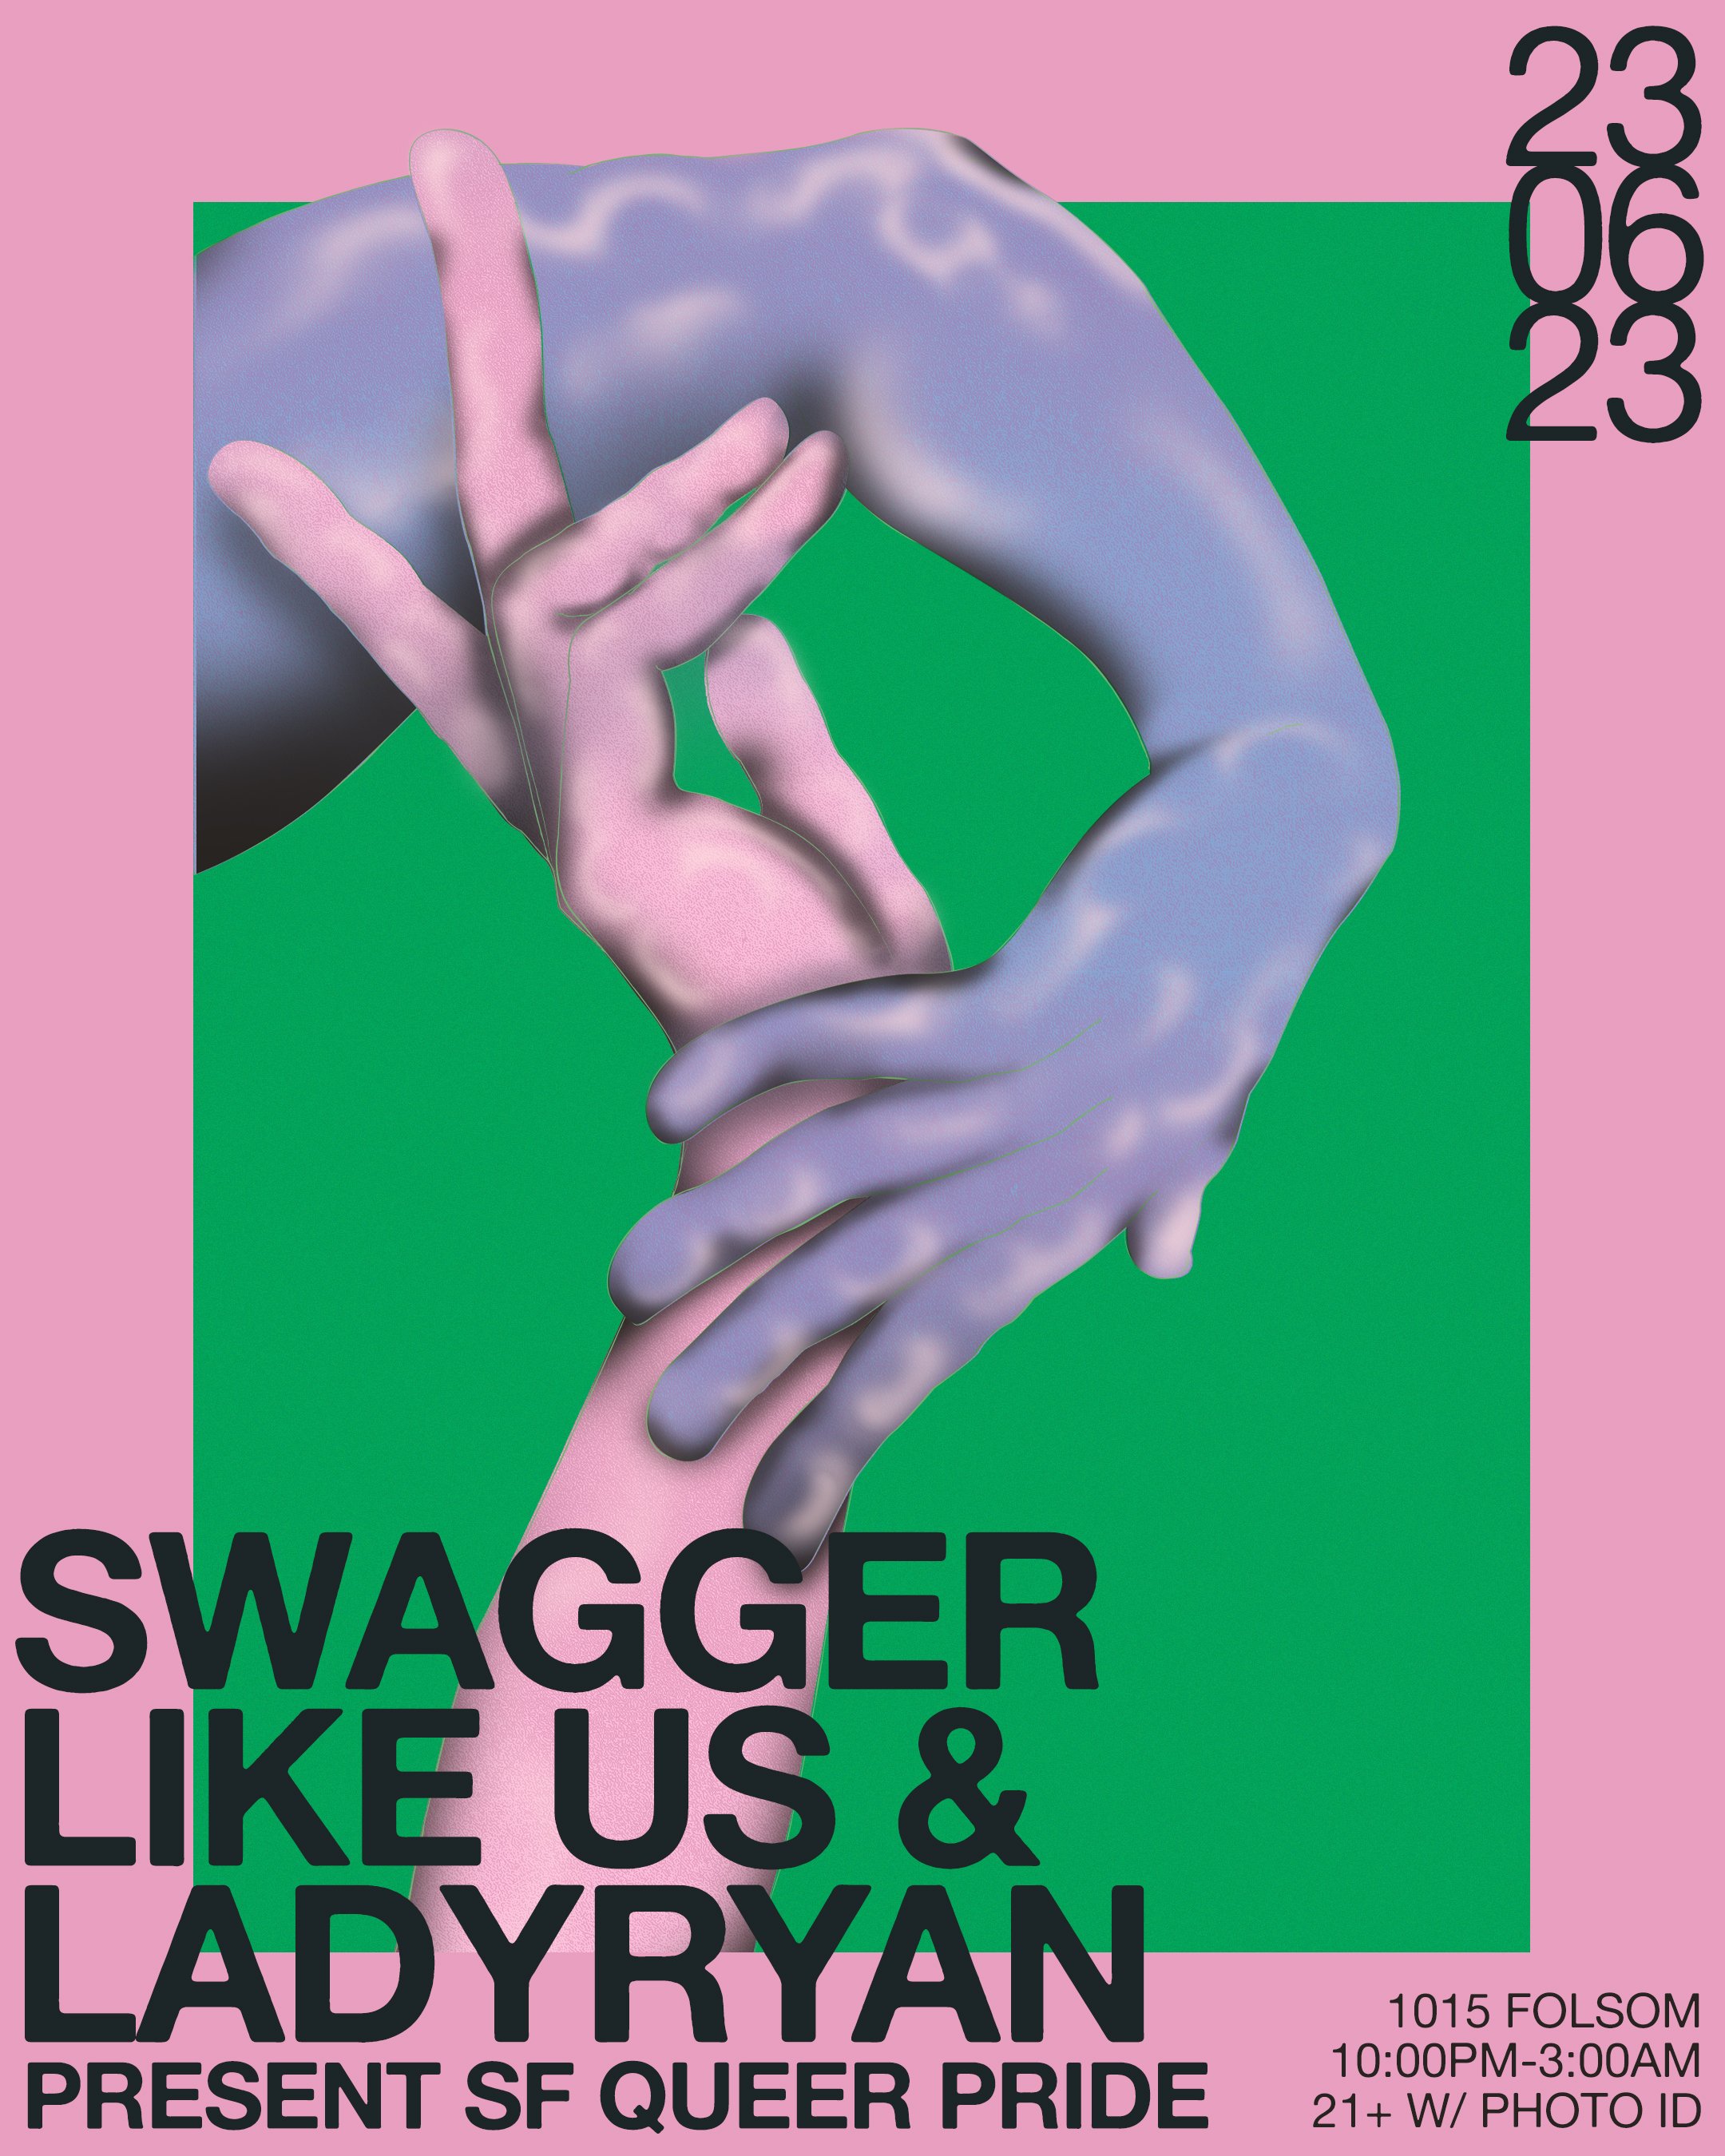 Swagger-Like-Us-x-Lady-Ryan-SF-Queer-Pride-Artboard-1Artboard 1 copy.jpg